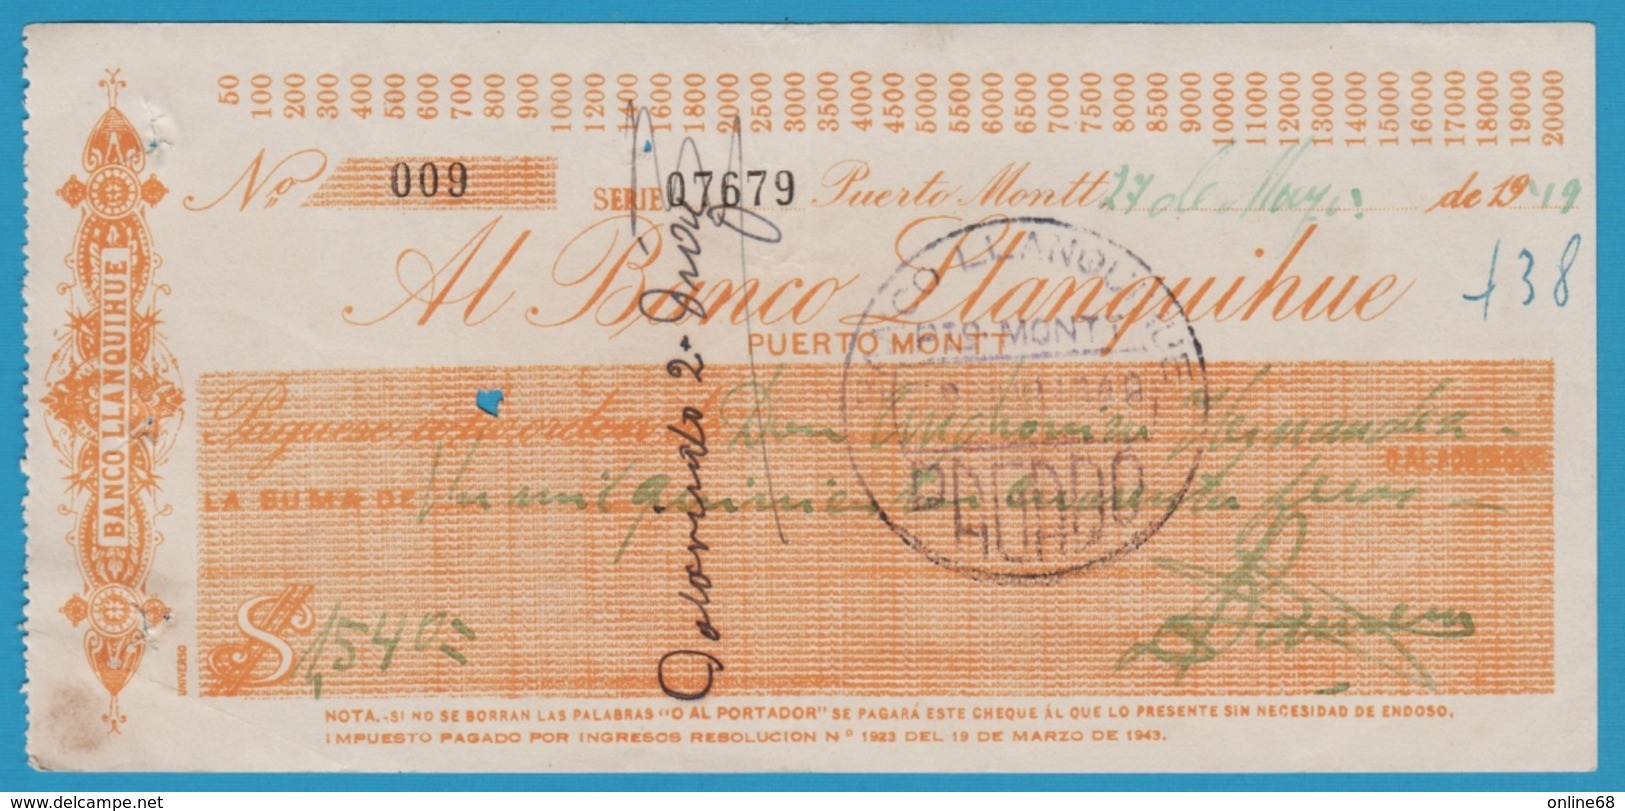 CHILE PUERTO MONTT CHEQUE AL BANCO LLANQUIHUE 1949 - Cheques En Traveller's Cheques